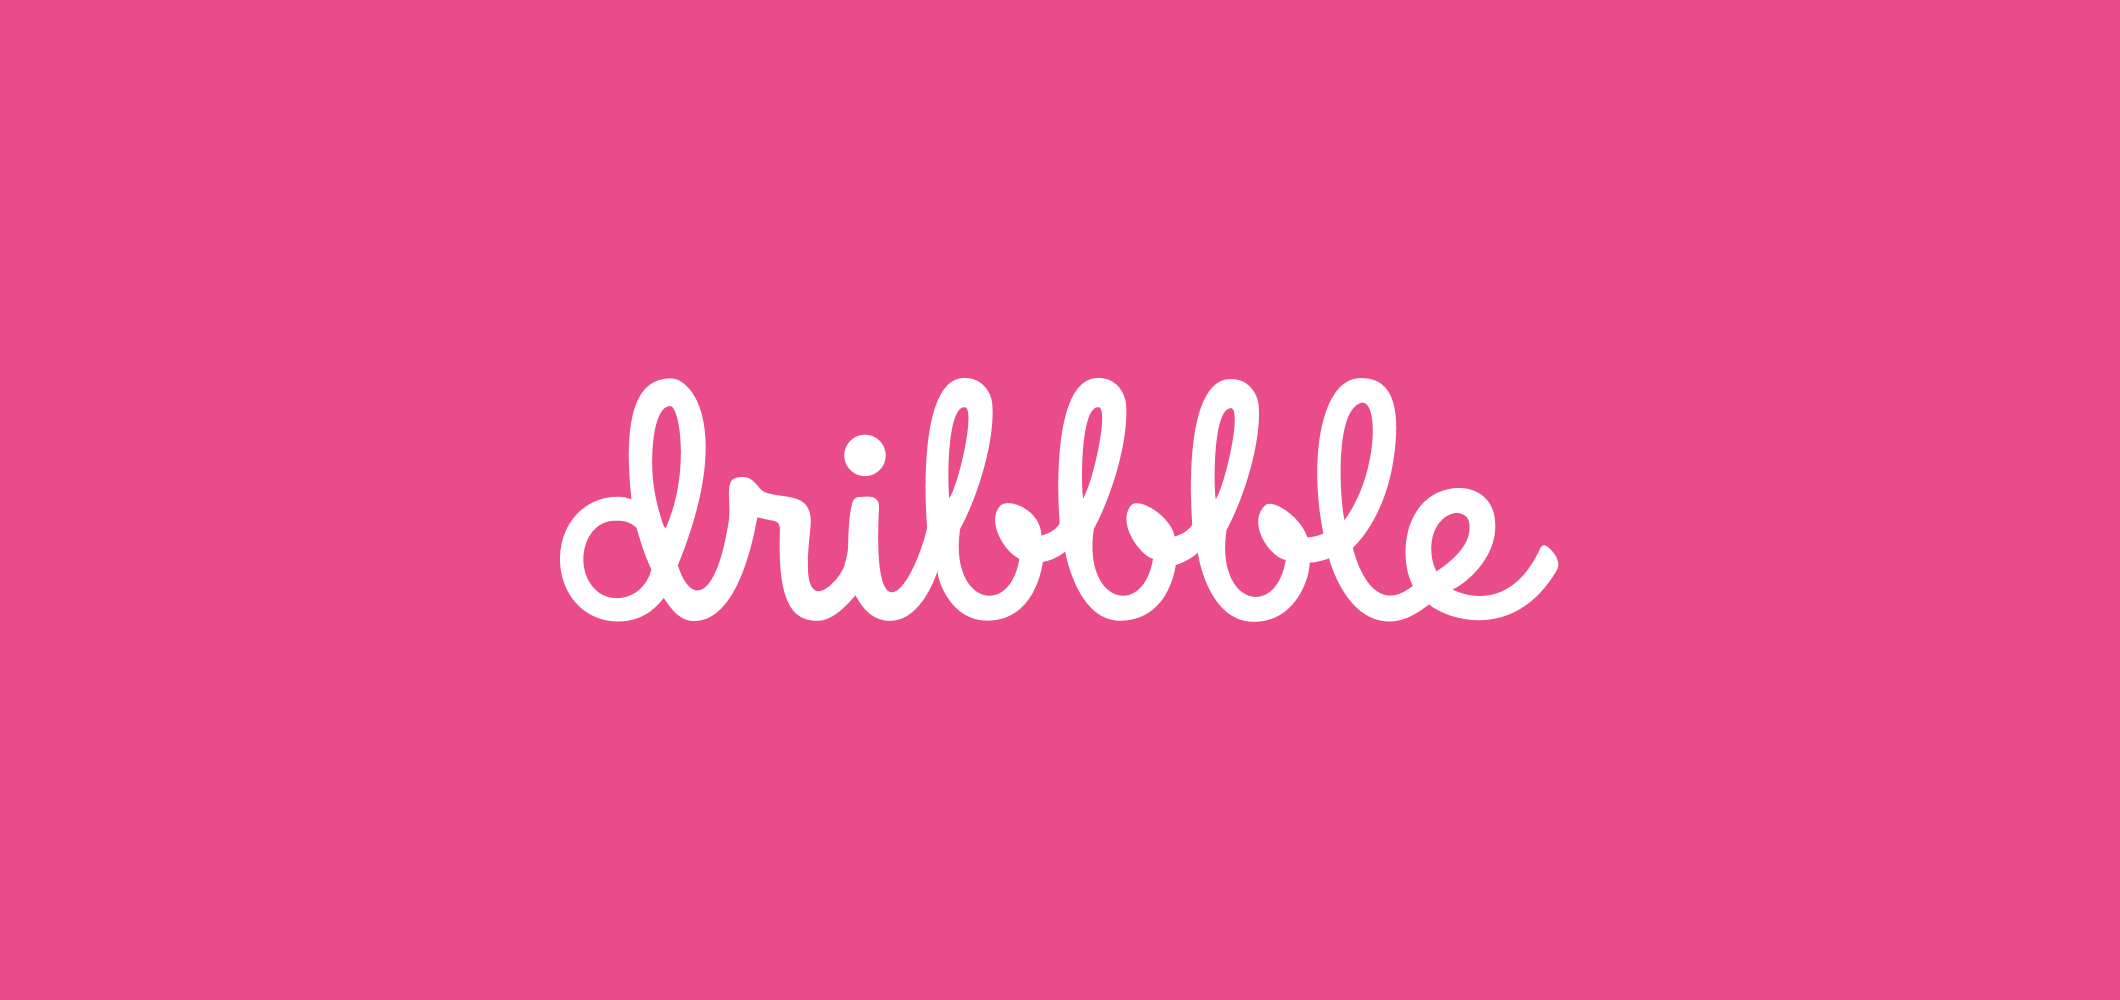 Dribbble – Logos Download